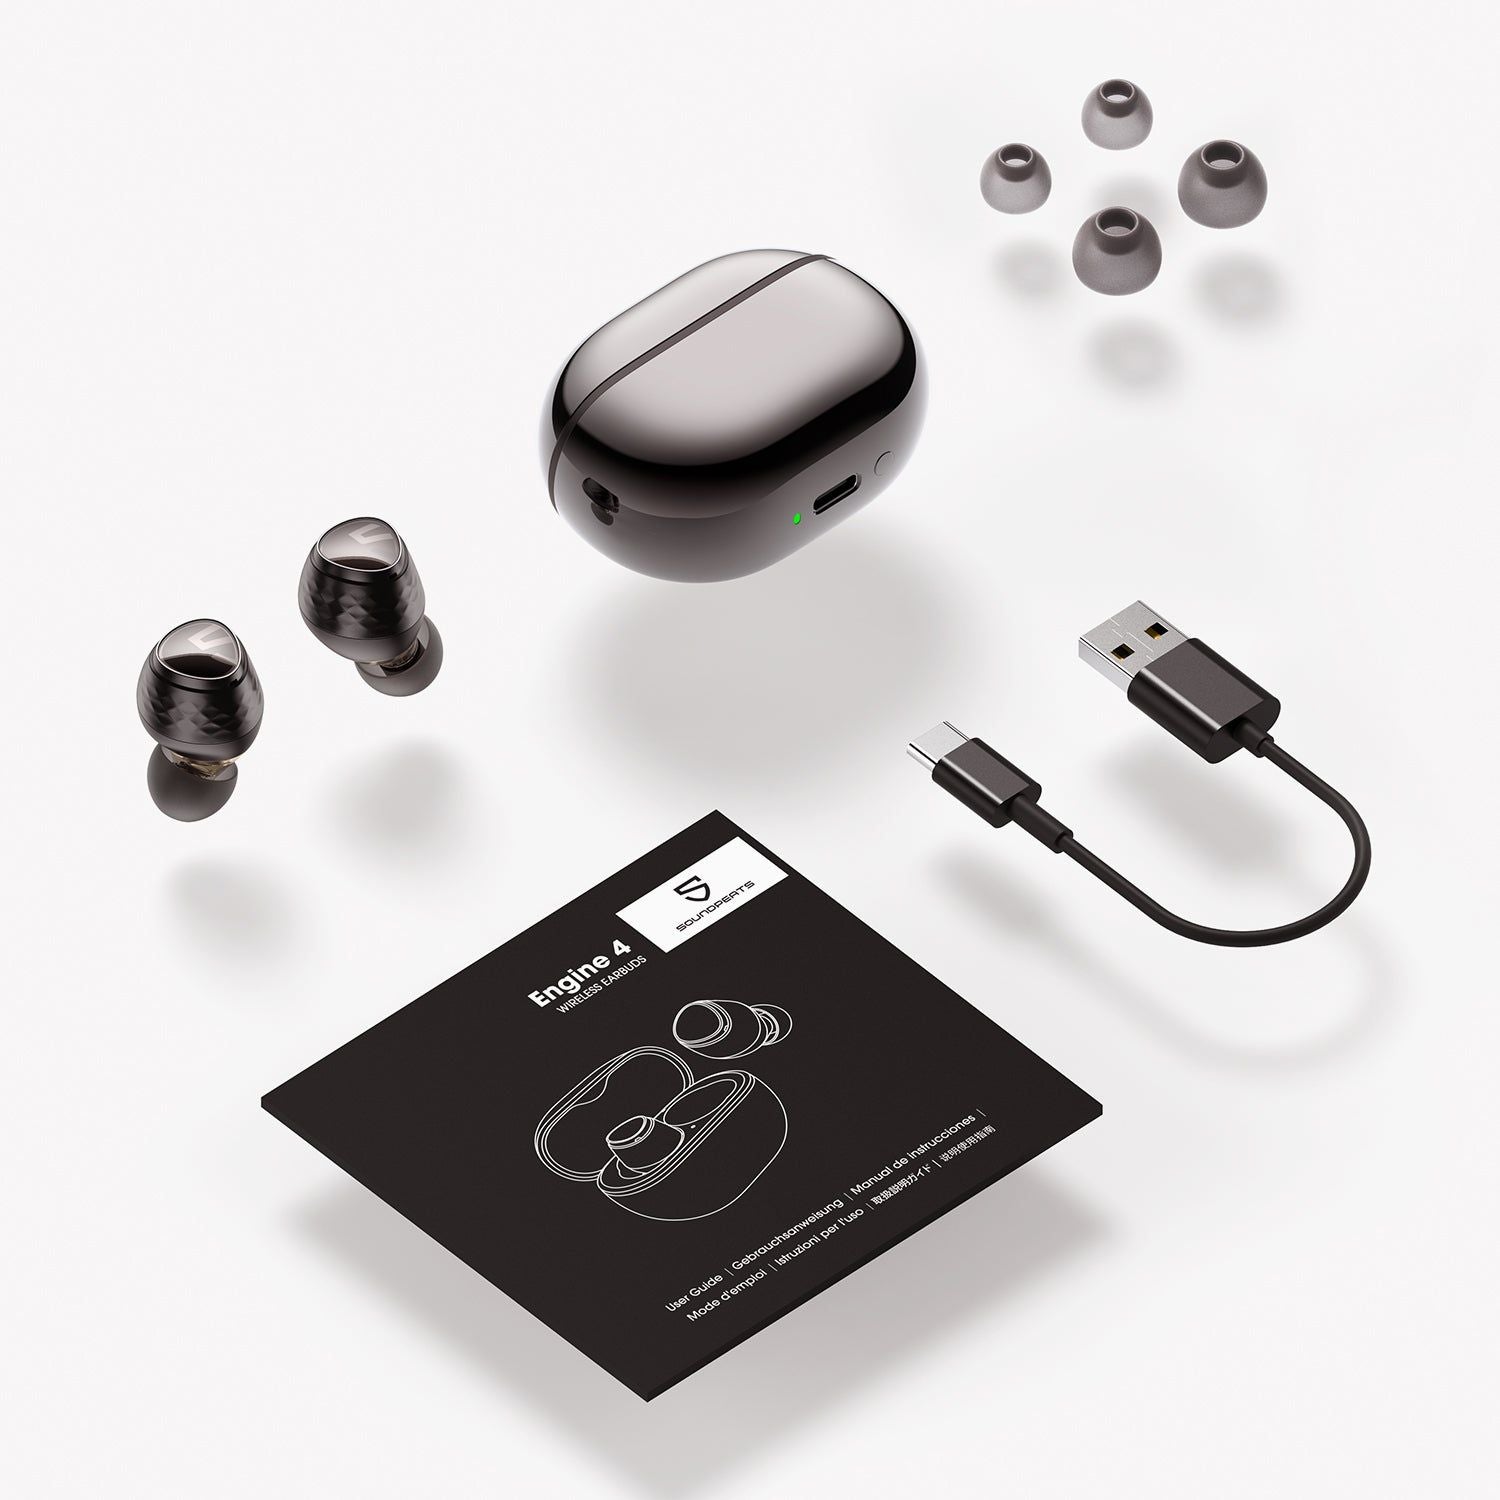 SoundPEATS Engine4 Bluetooth Earbuds with LDAC | Hifi Media Store